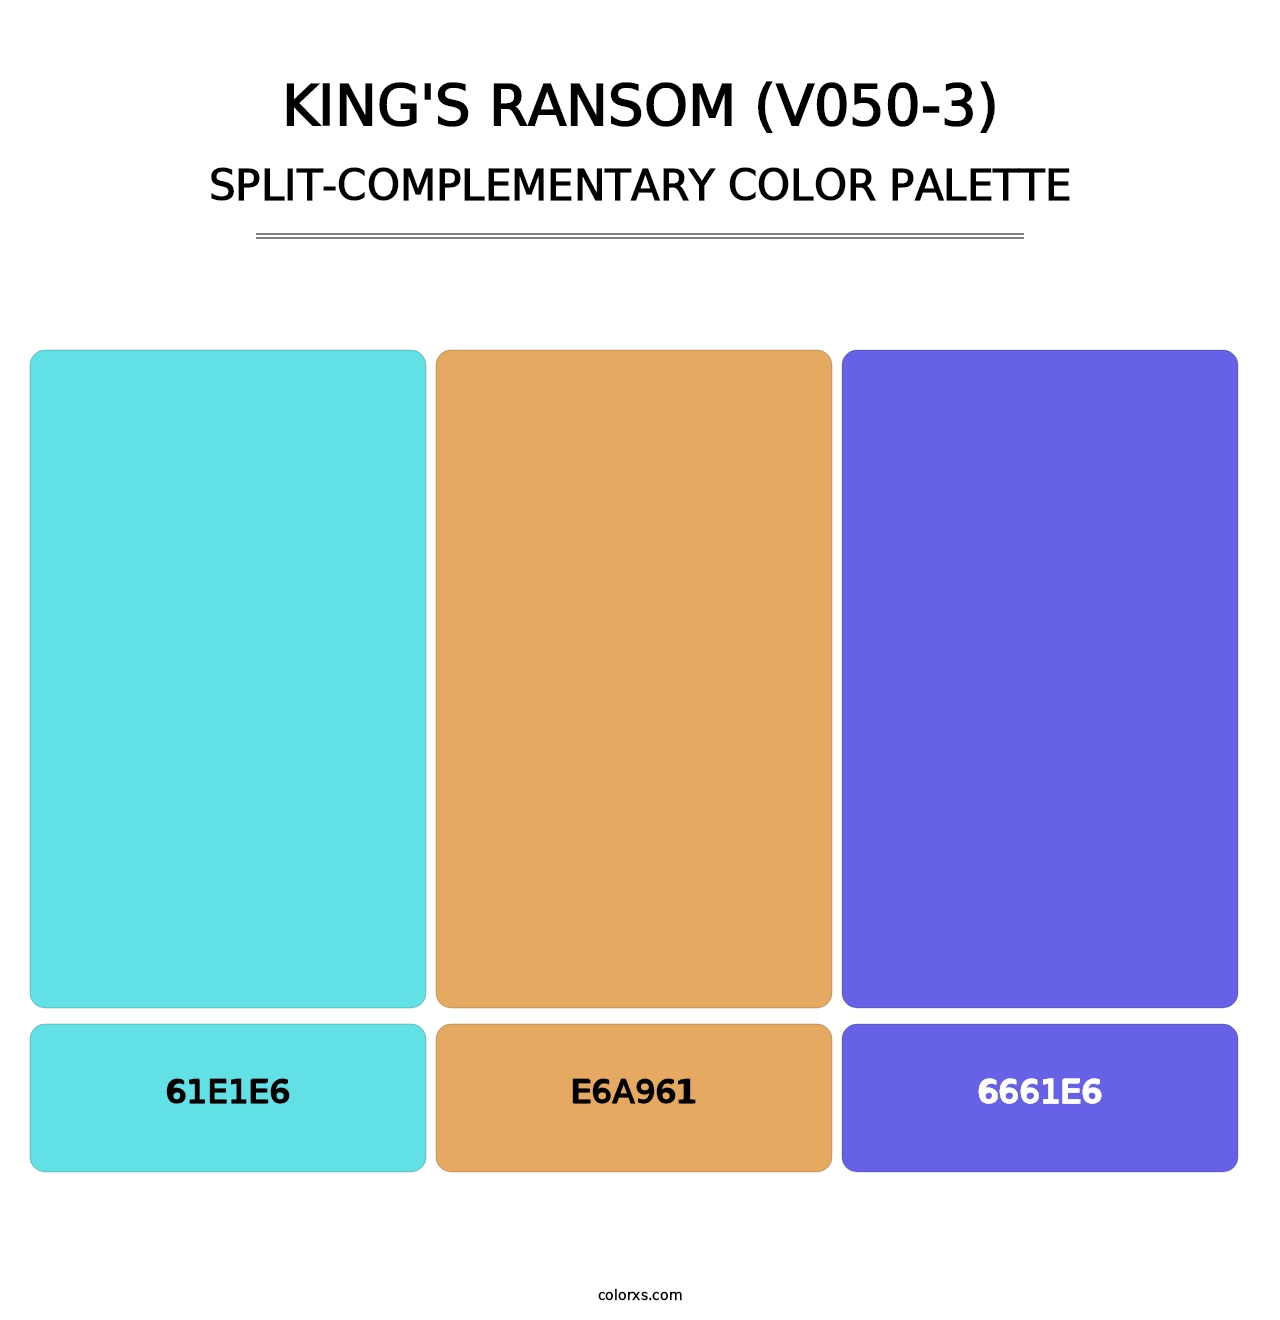 King's Ransom (V050-3) - Split-Complementary Color Palette